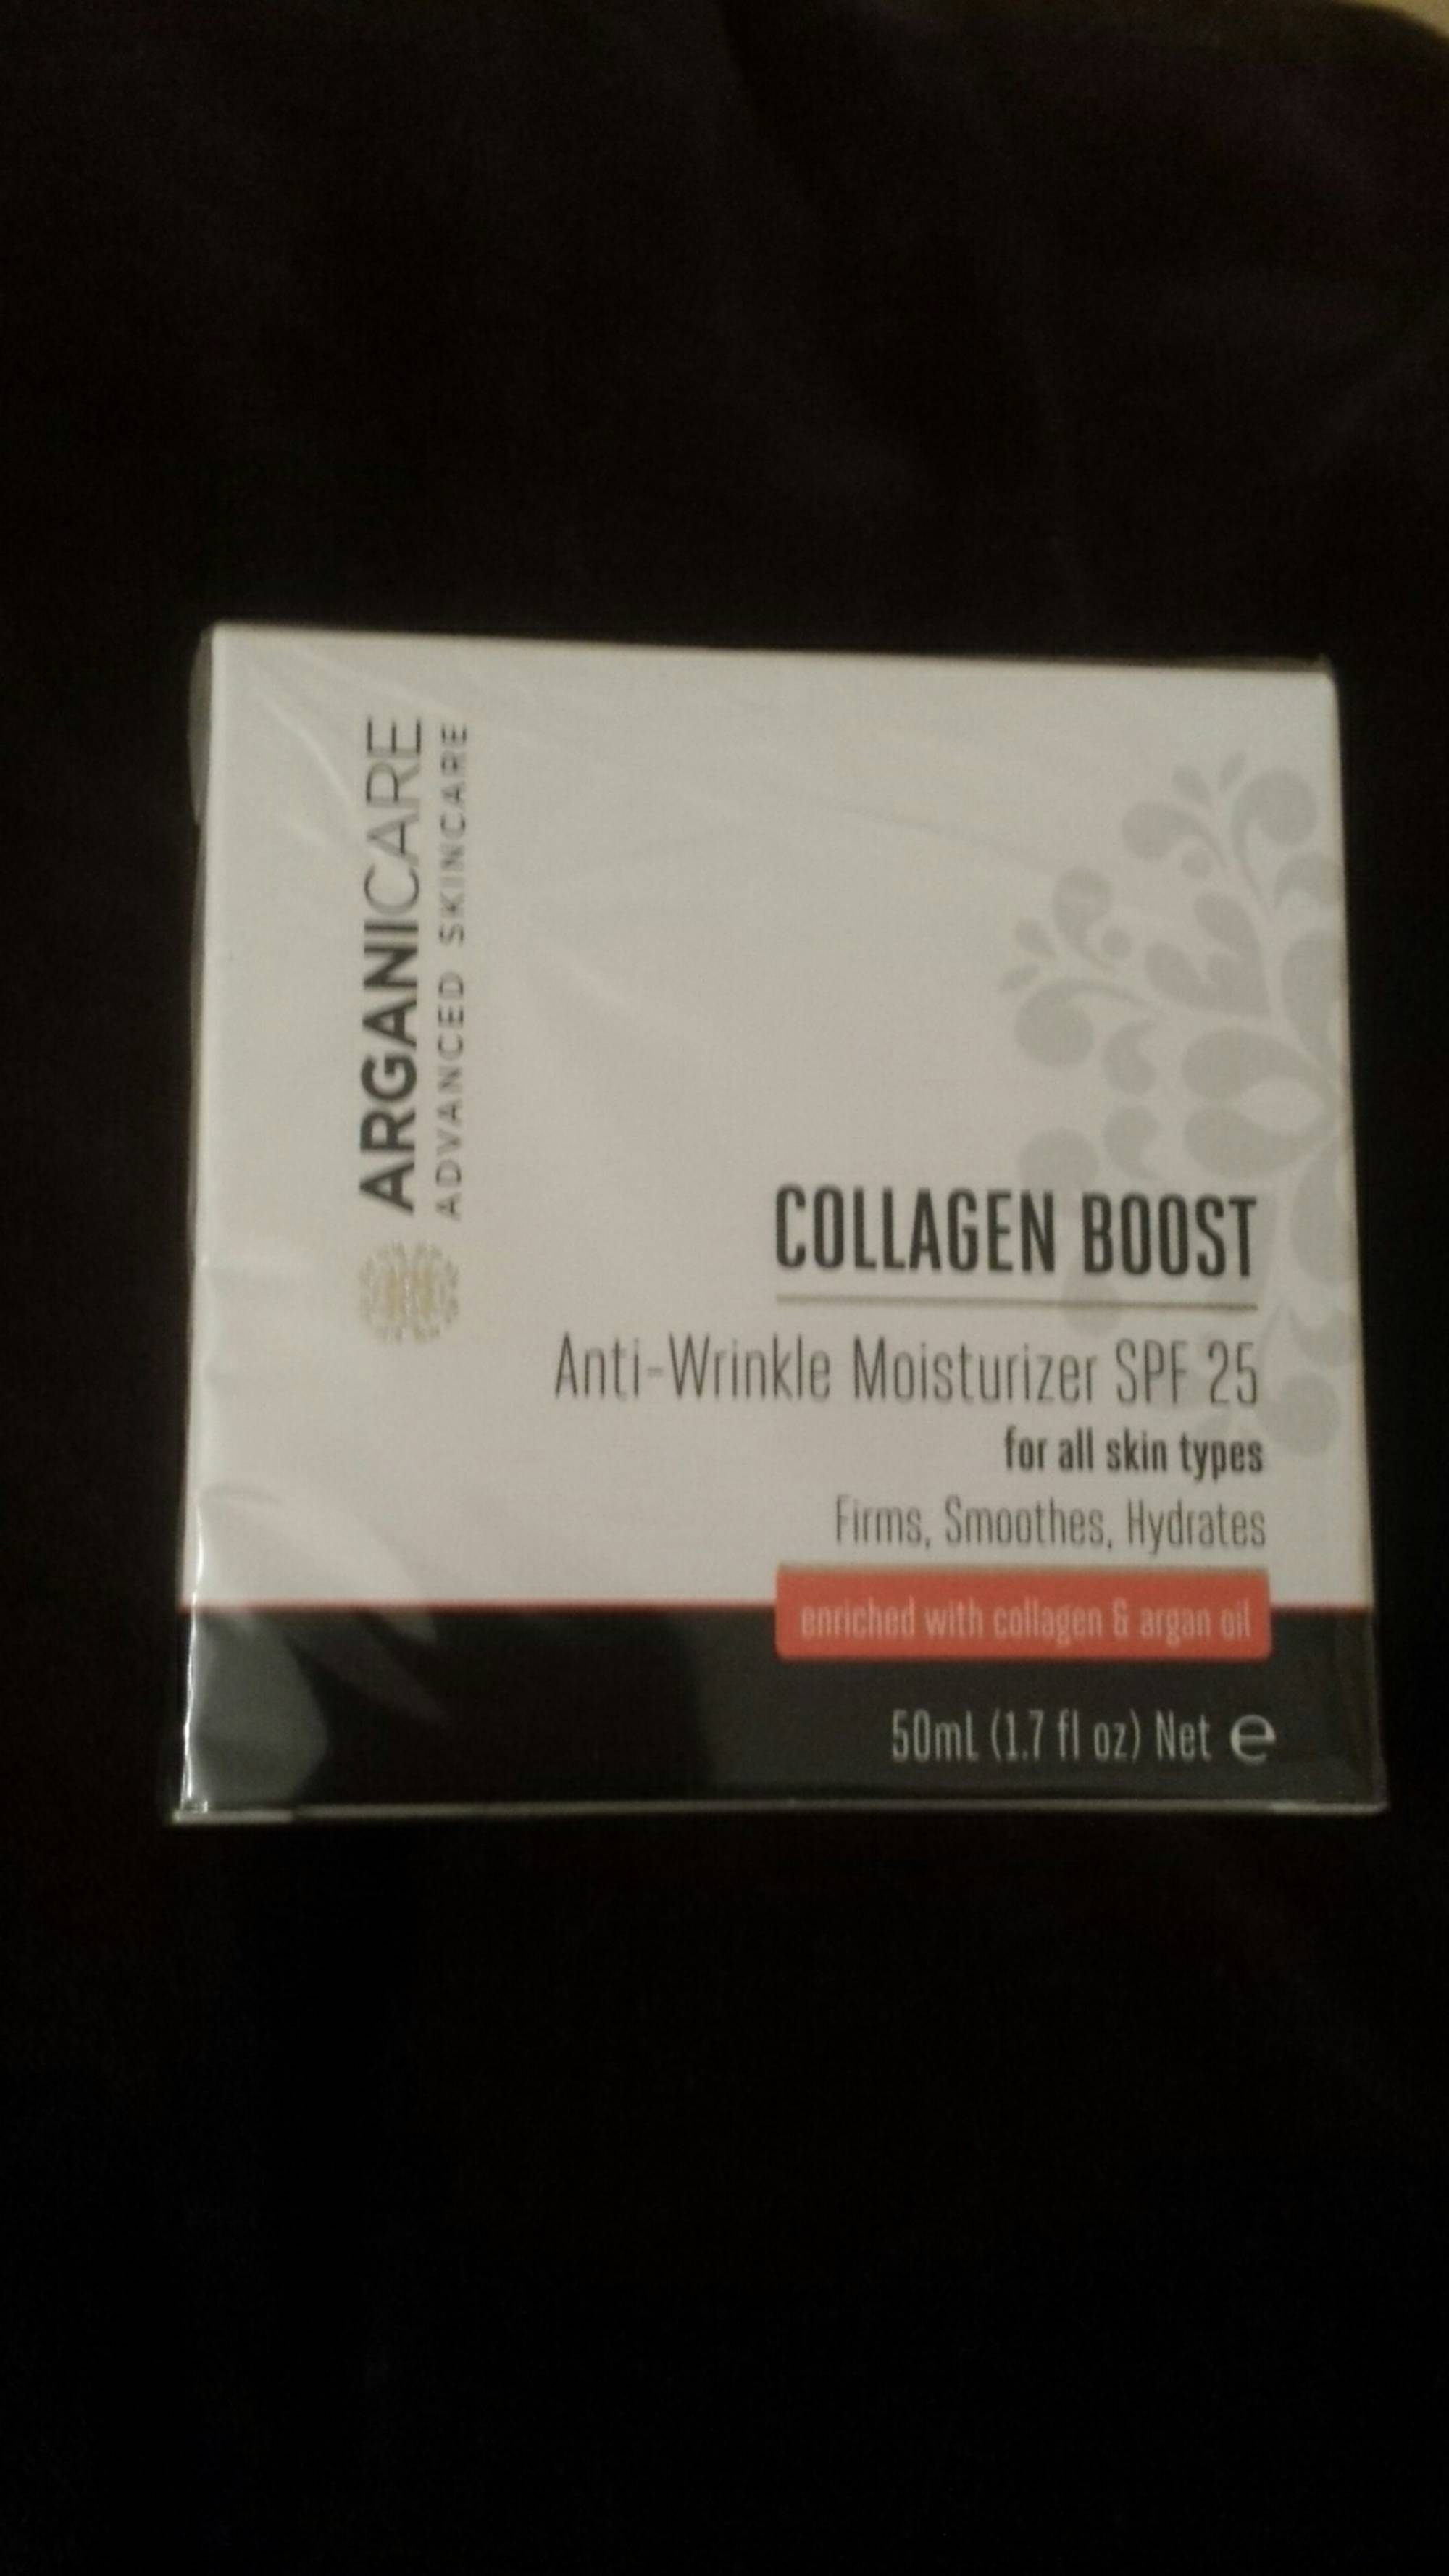 ARGANICARE - Collagen Boost - Anti-wrinkle moisturizer spf 25